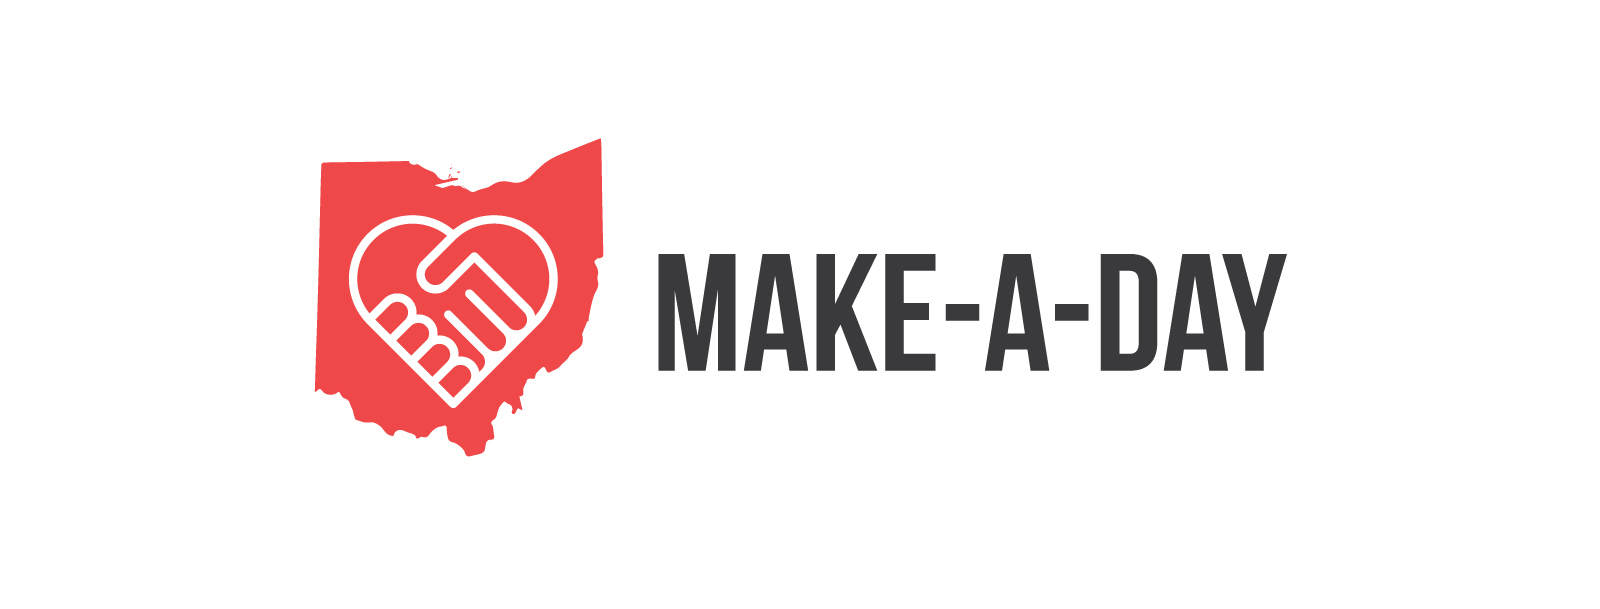 Make A Day Logo.jpg (97 kb)